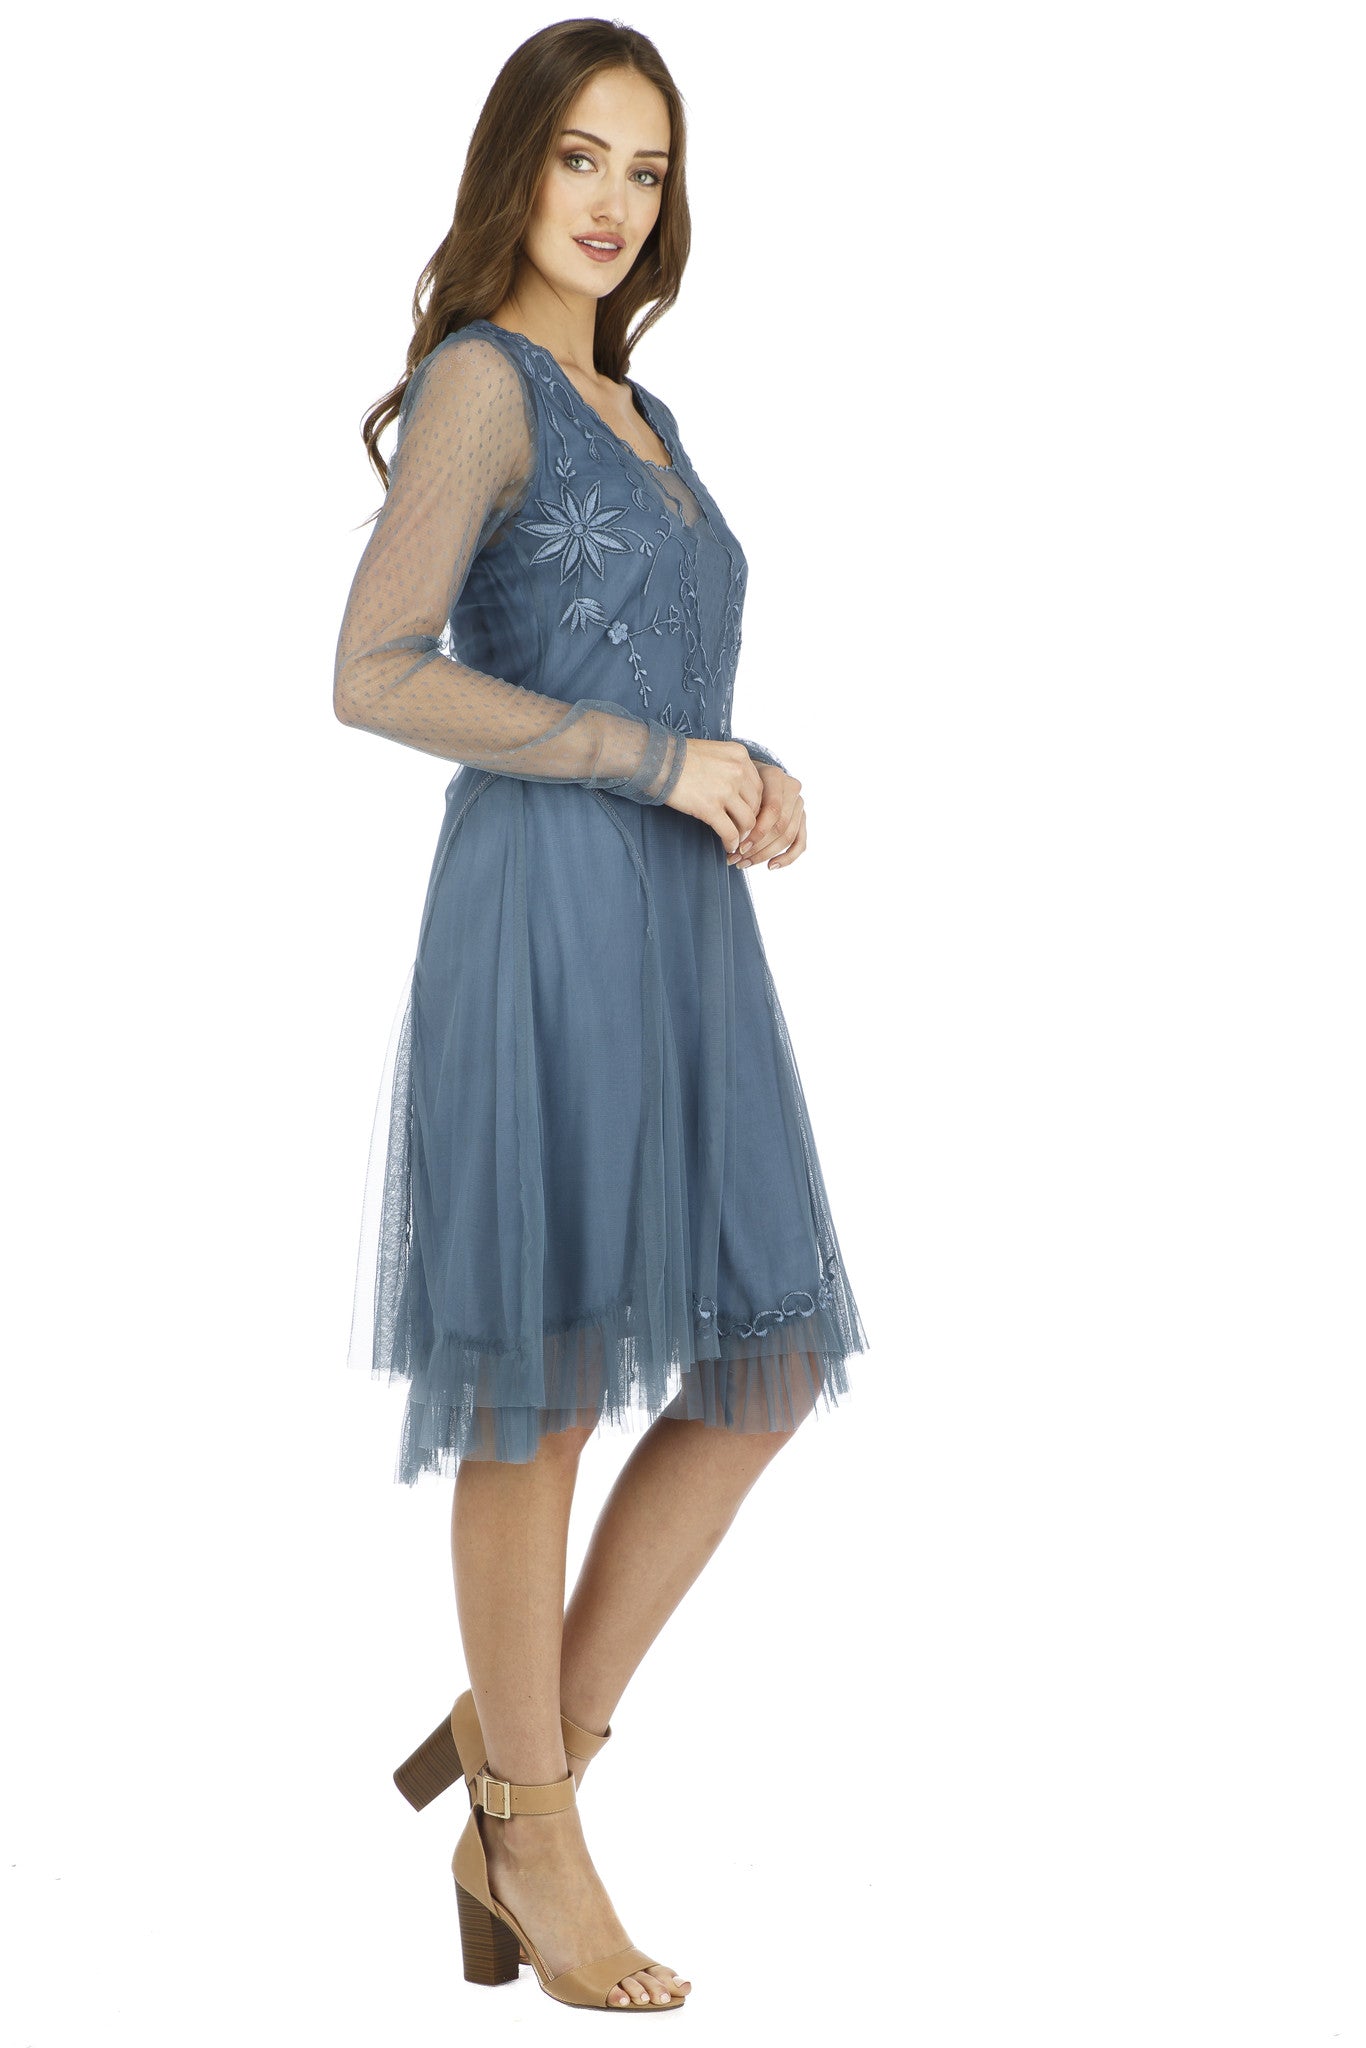 Nataya Serenity AL-252 Sapphire Dress